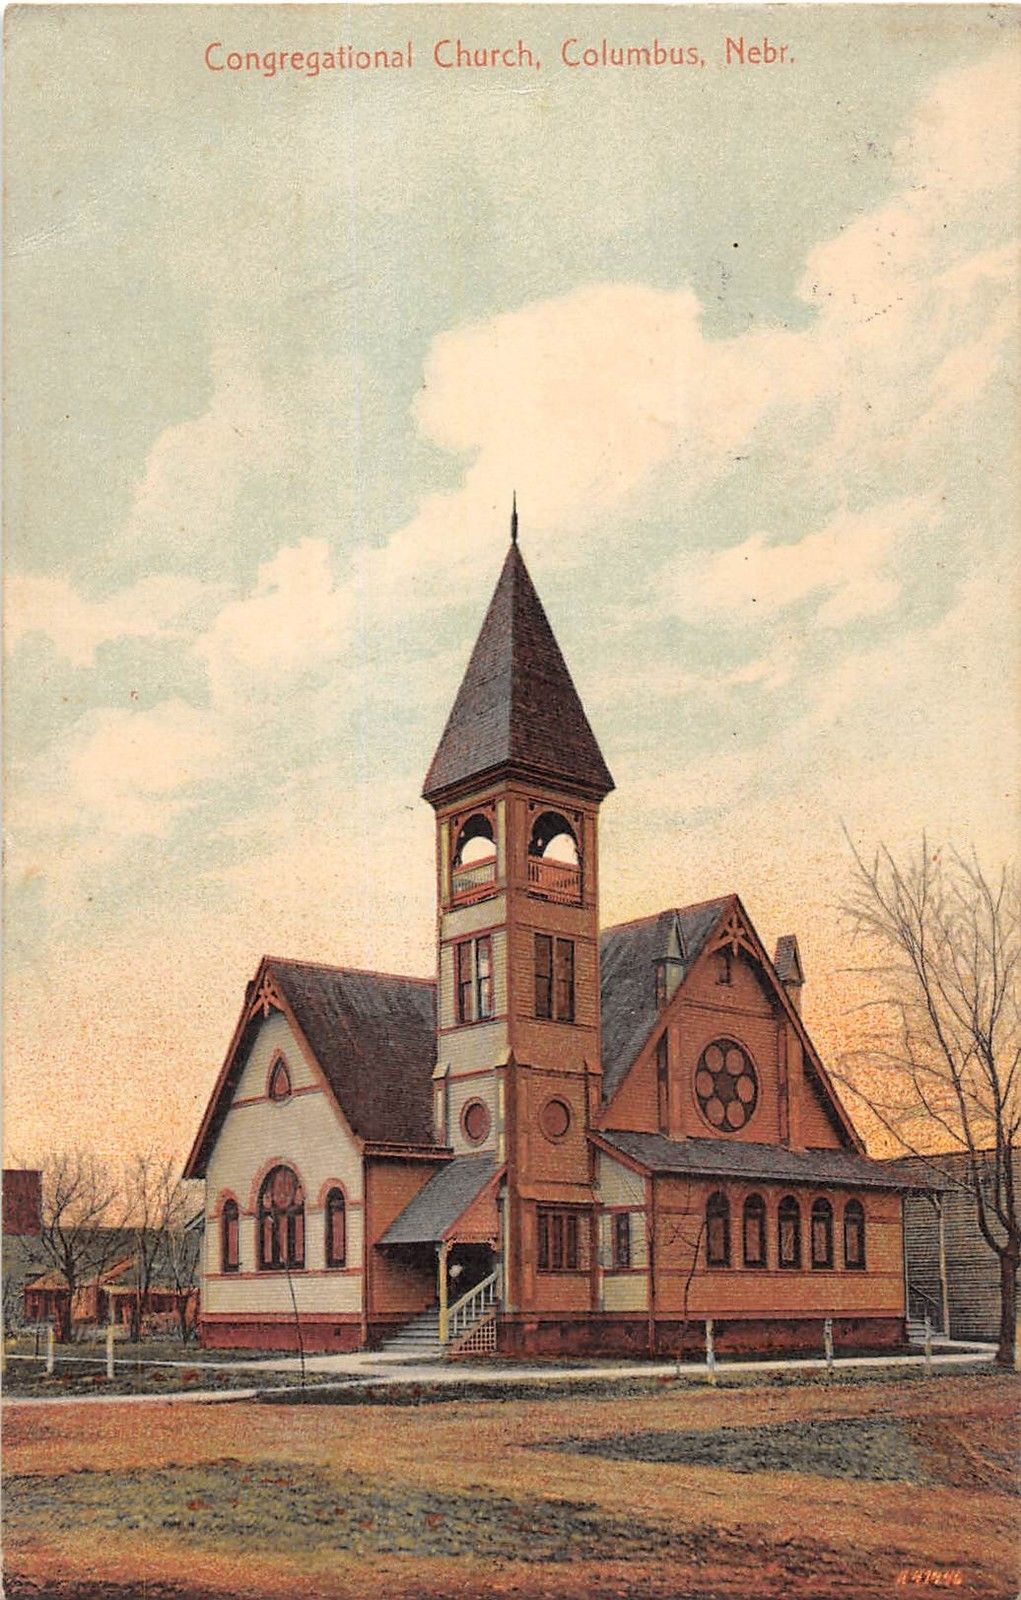 Congregational Church of Columbus, Nebraska